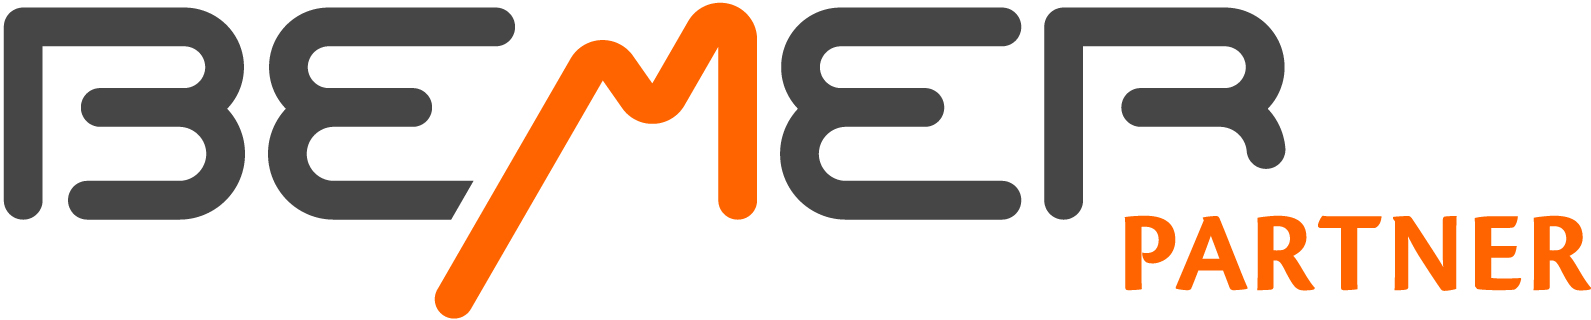 Bemer logo